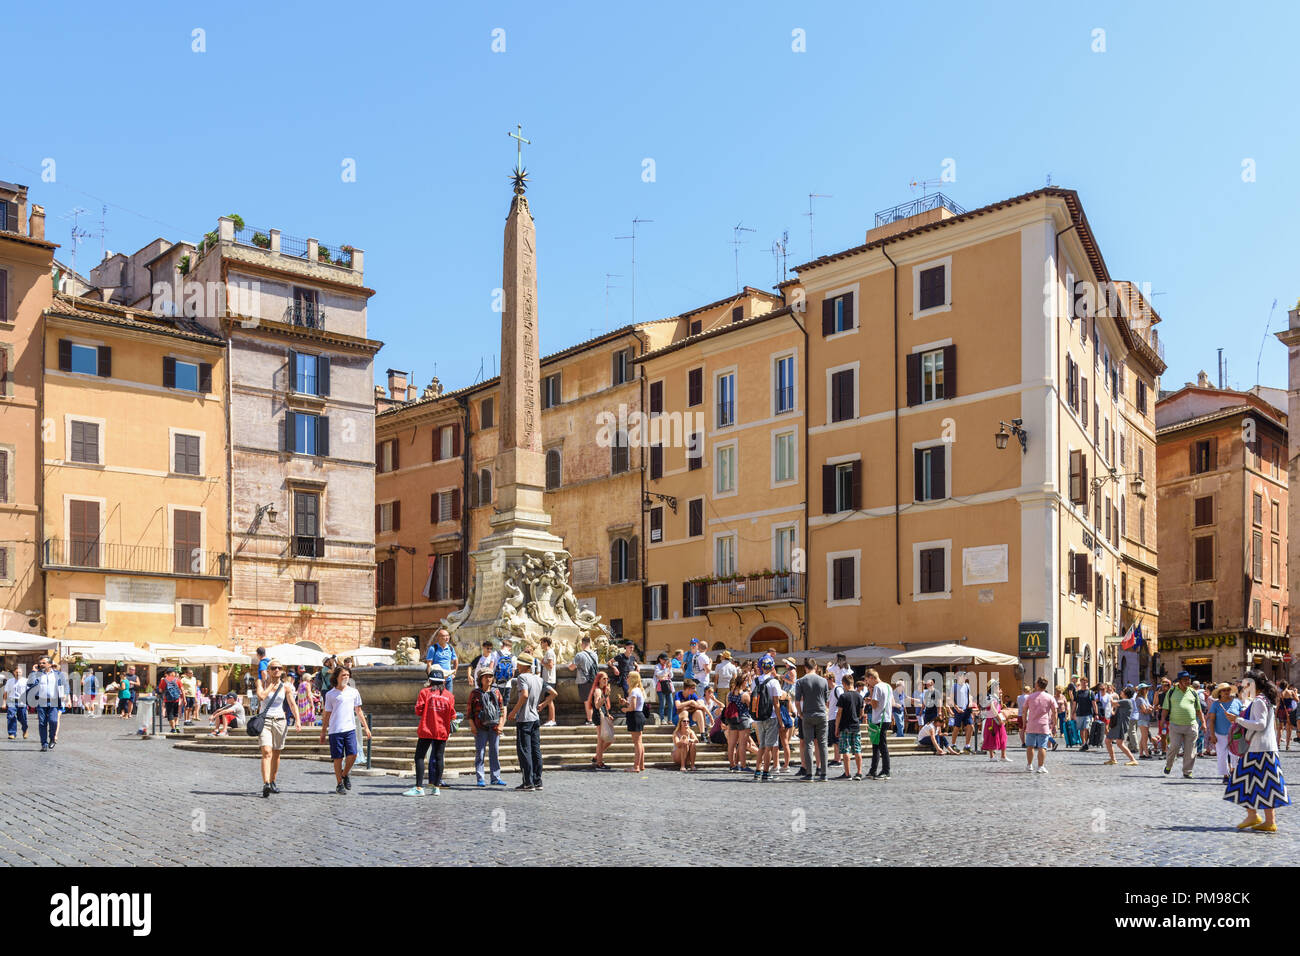 Fontana del Pantheon, Piazza della Rotonda, Rome, Italy Stock Photo